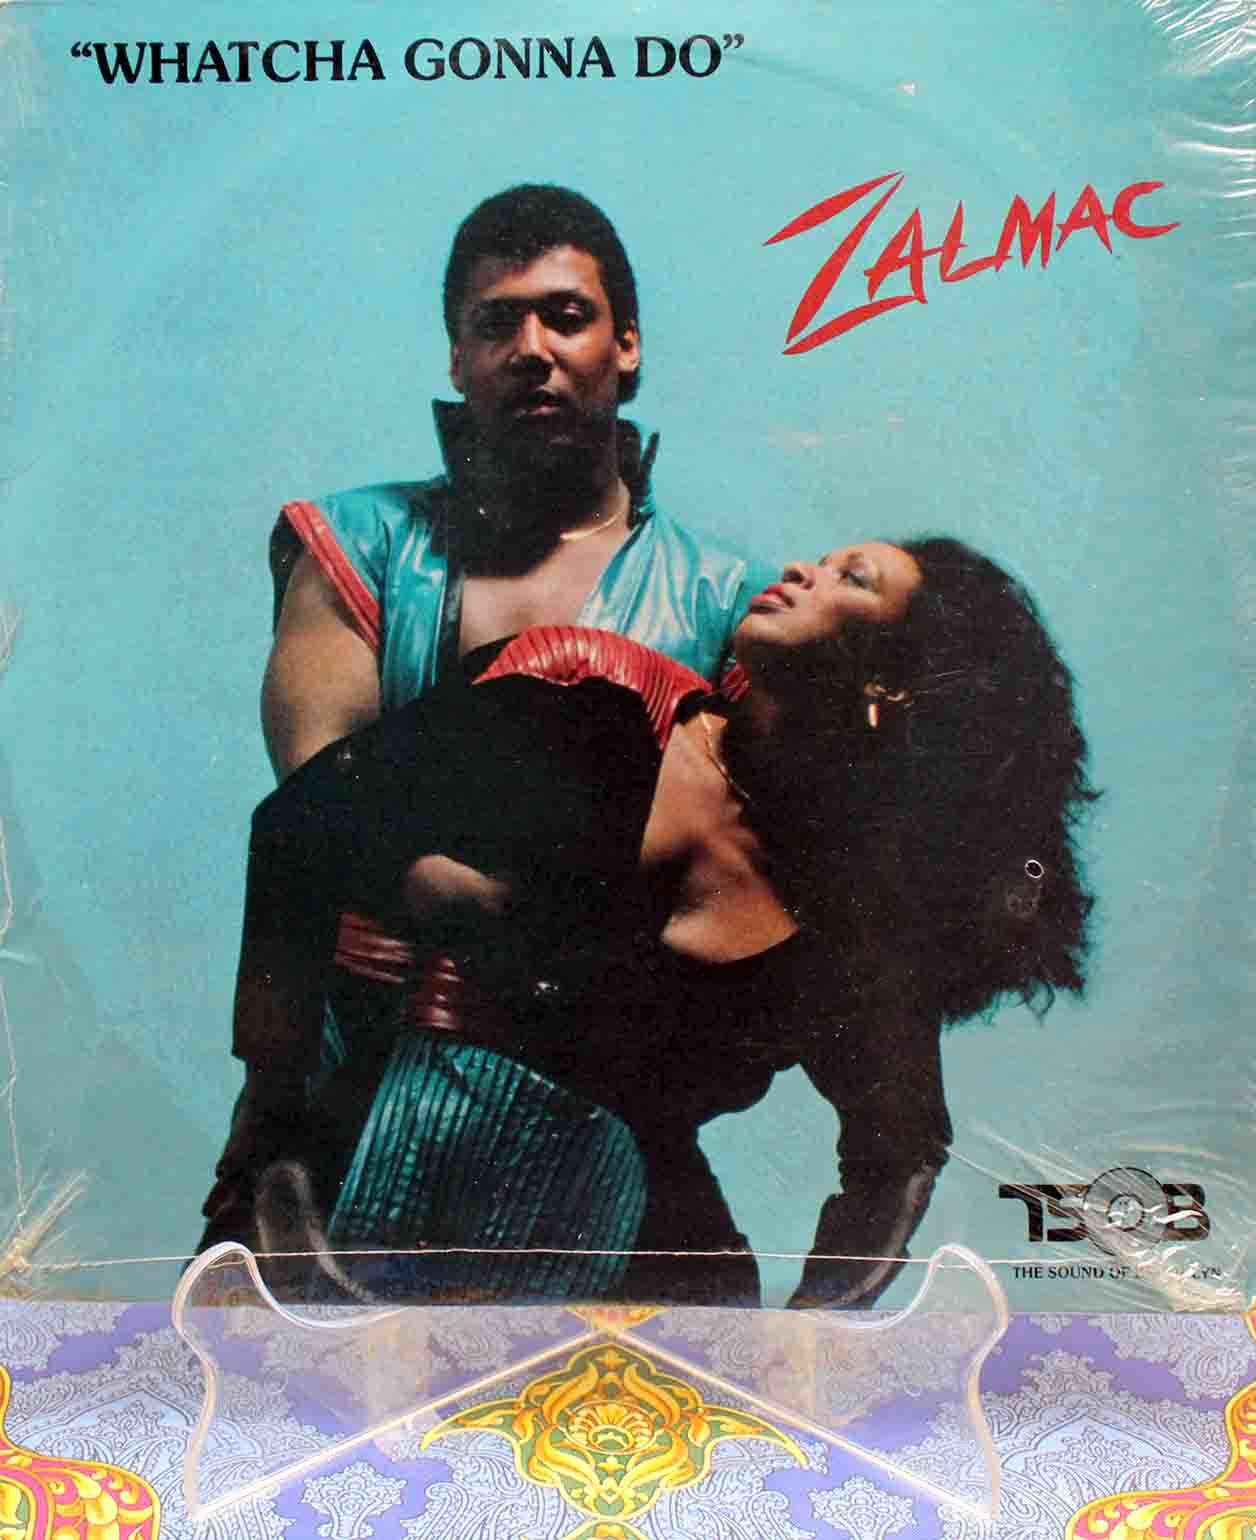 Zalmac - Whatcha Gonna Do 01